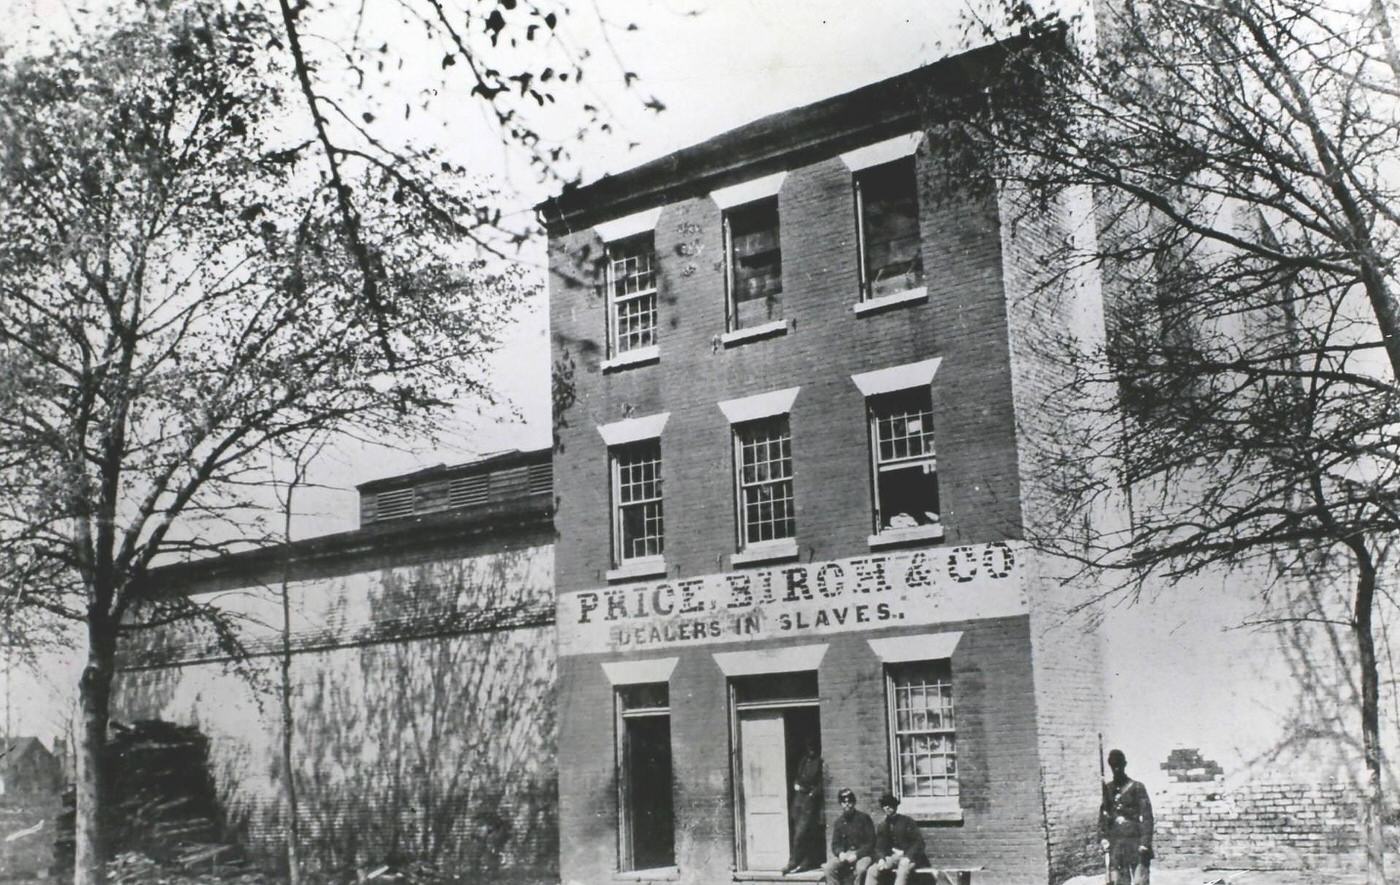 The premises of Price, Birch & Co, Dealers in Slaves, at a slave market in Alexandria, Virginia, 1860.